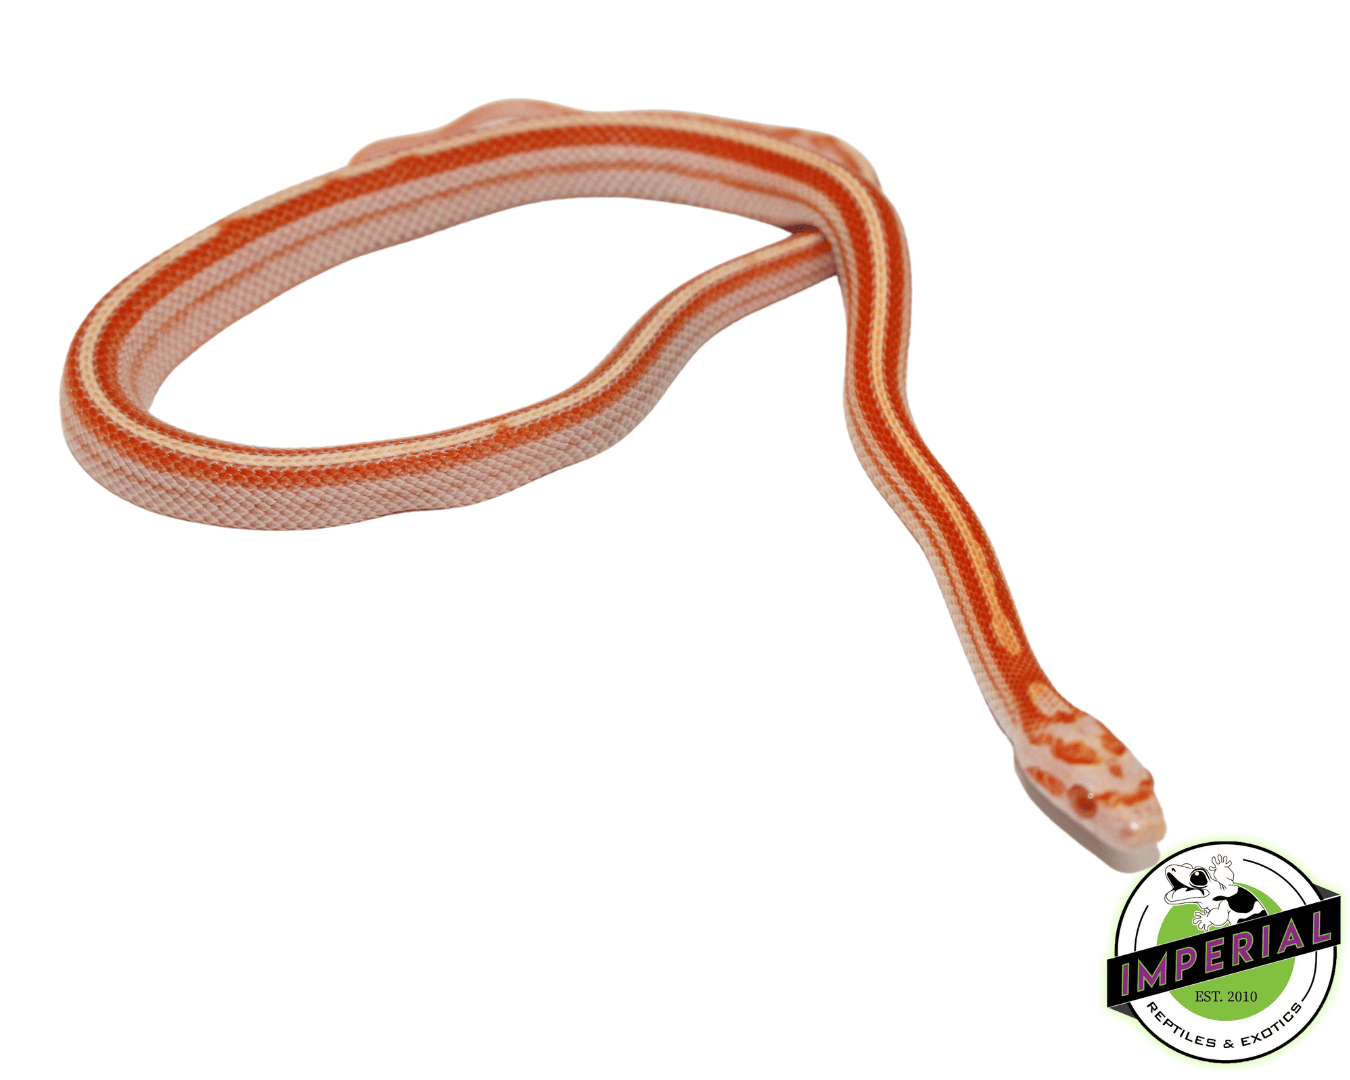 Creamsicle Tessera corn snake for sale, buy reptiles online